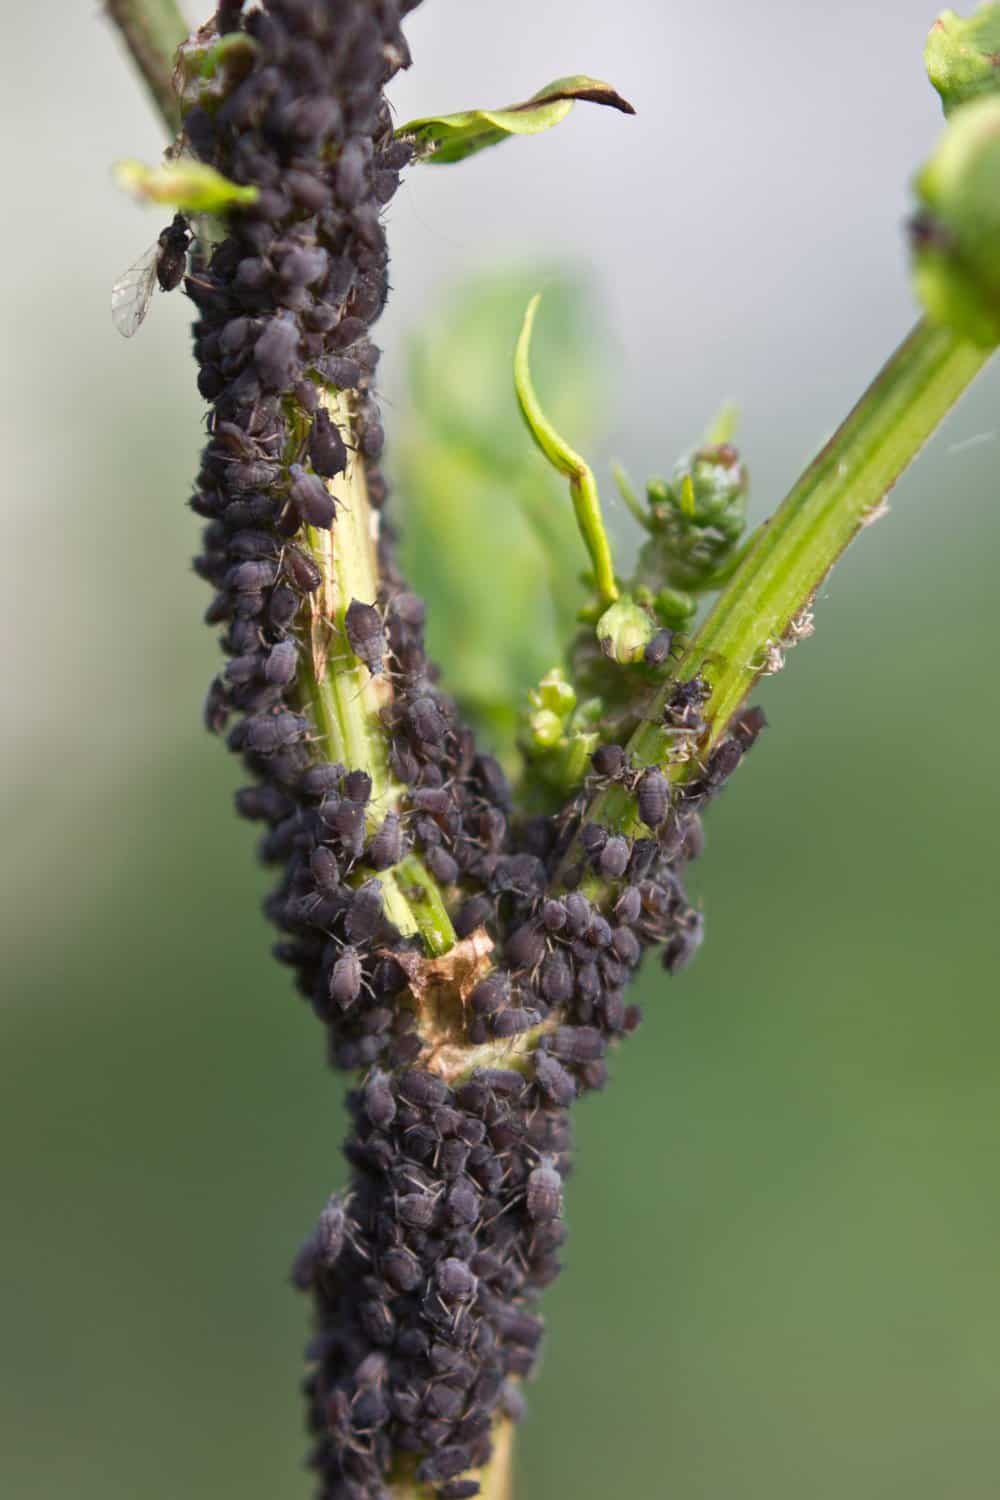 black aphids on a plant stem